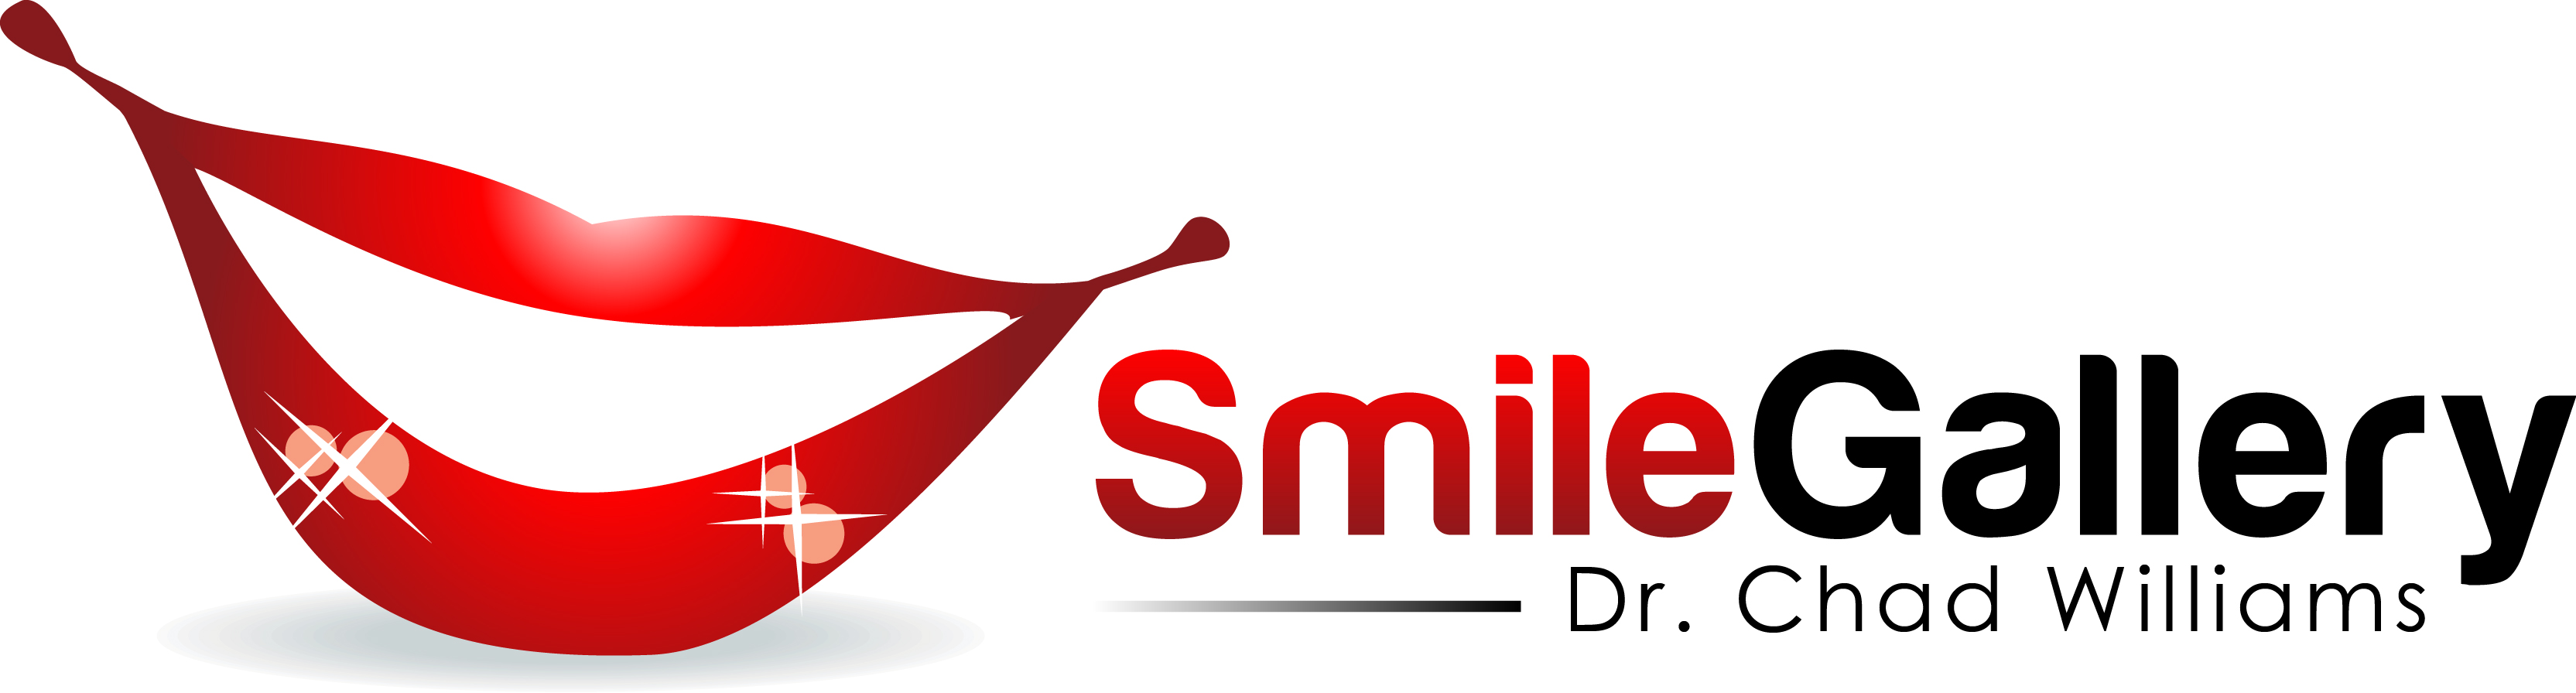 Smile Gallery logo 2